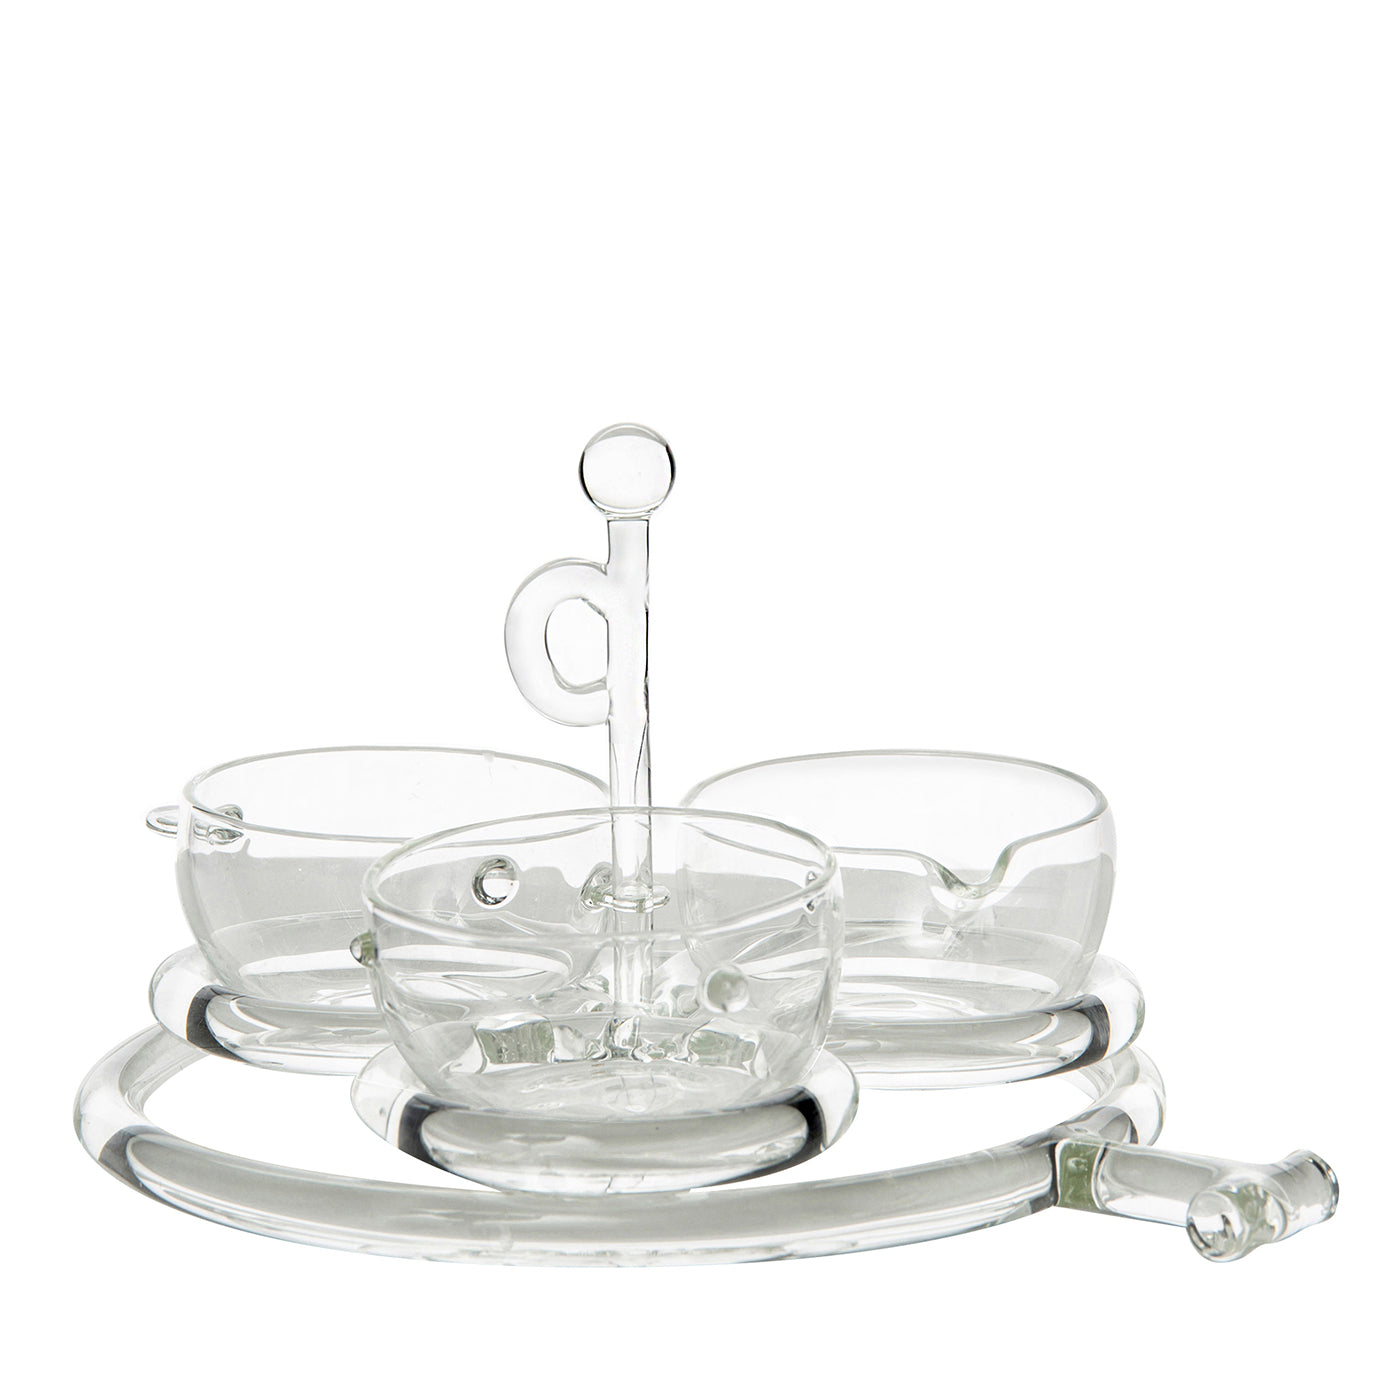 Sauciere - SiO2 Tableware Glass Collection - Hauptansicht